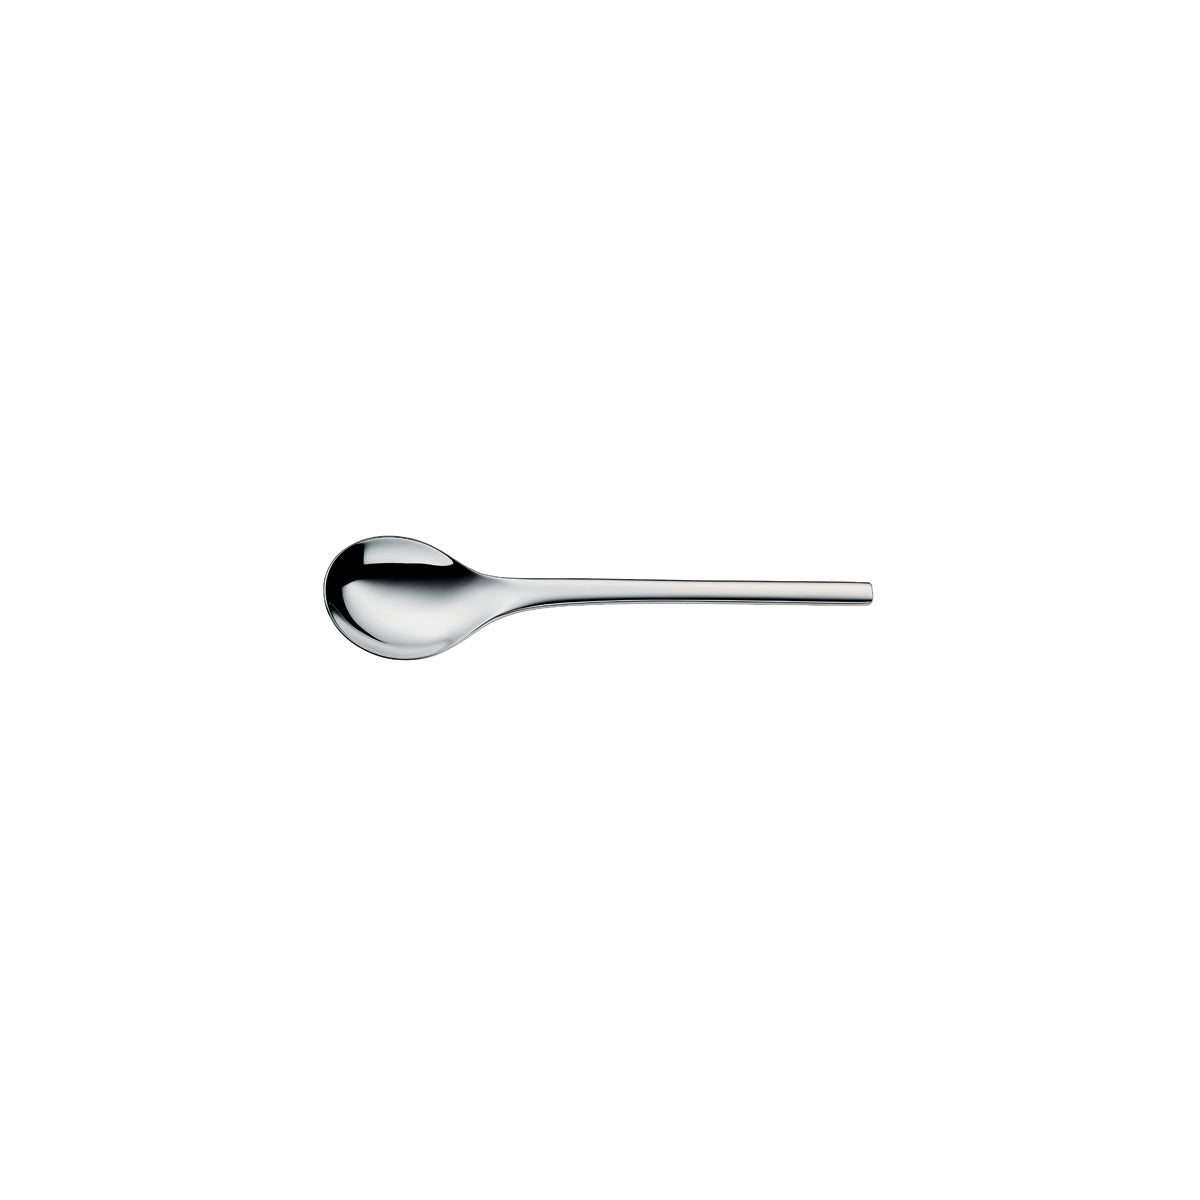 54.7289.6040 WMF Nordic Soup Spoon Stainless Steel Tomkin Australia Hospitality Supplies